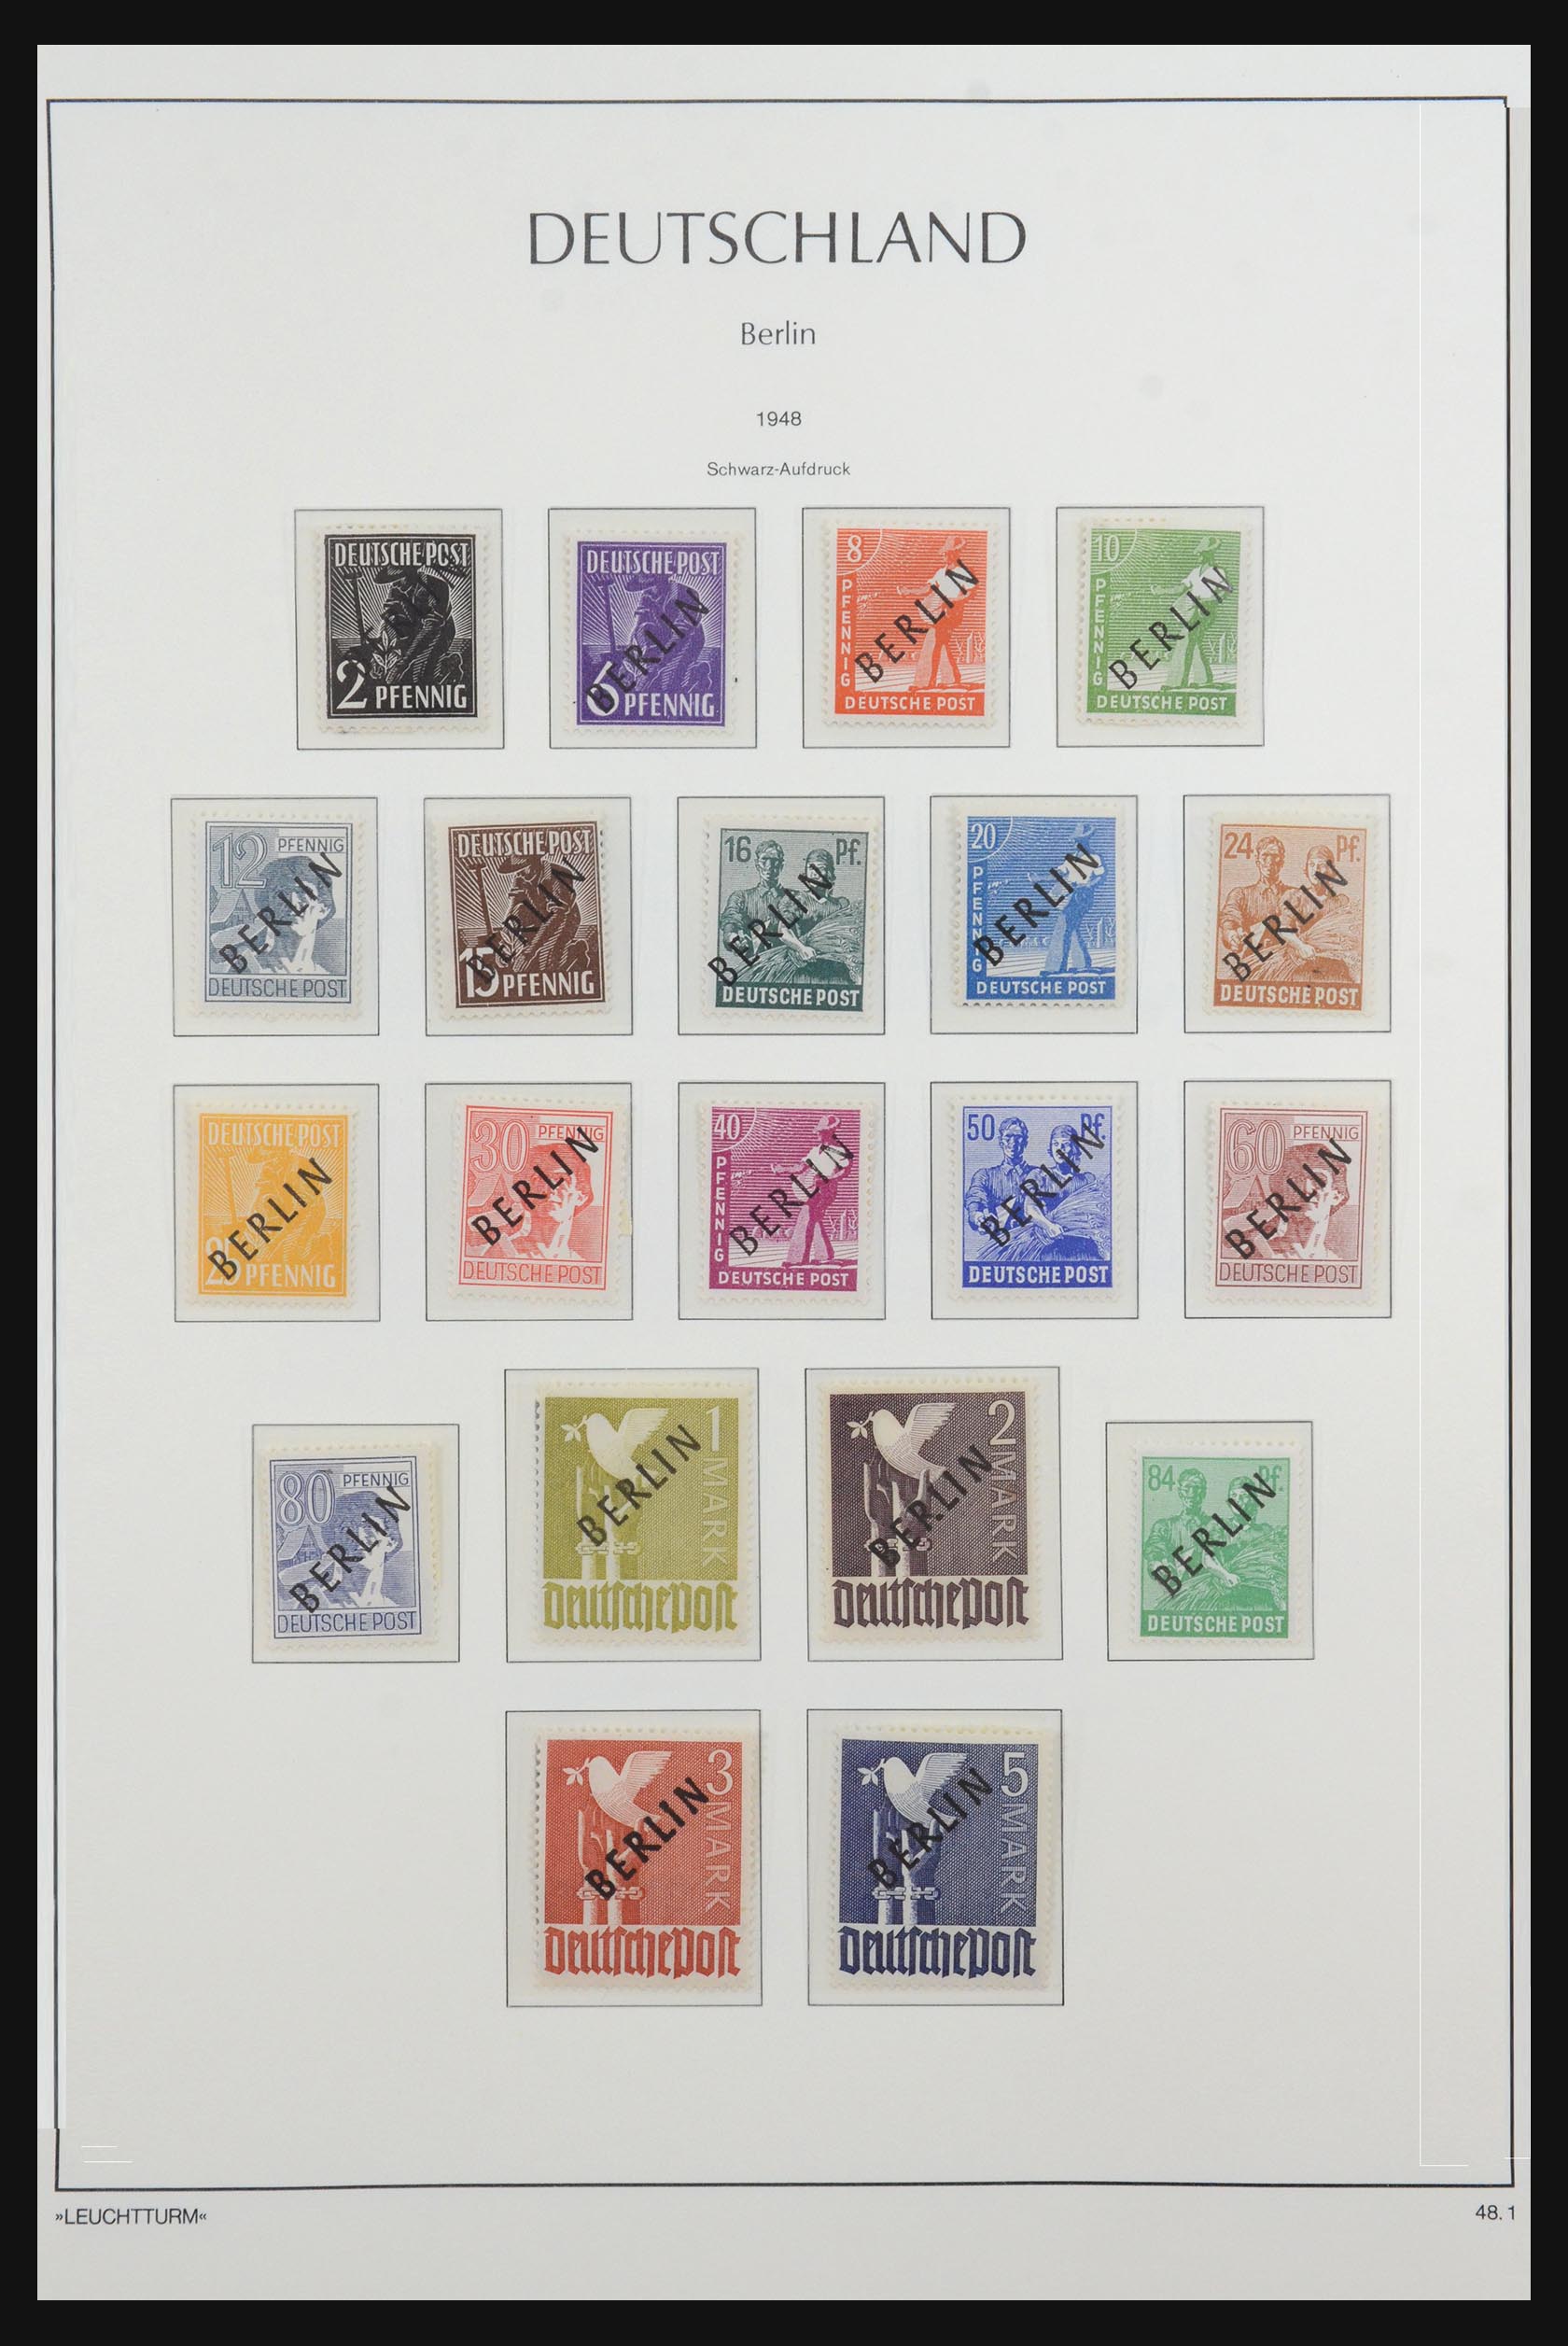 31601 001 - 31601 Bundespost, Berlin and Saar 1948-2008.